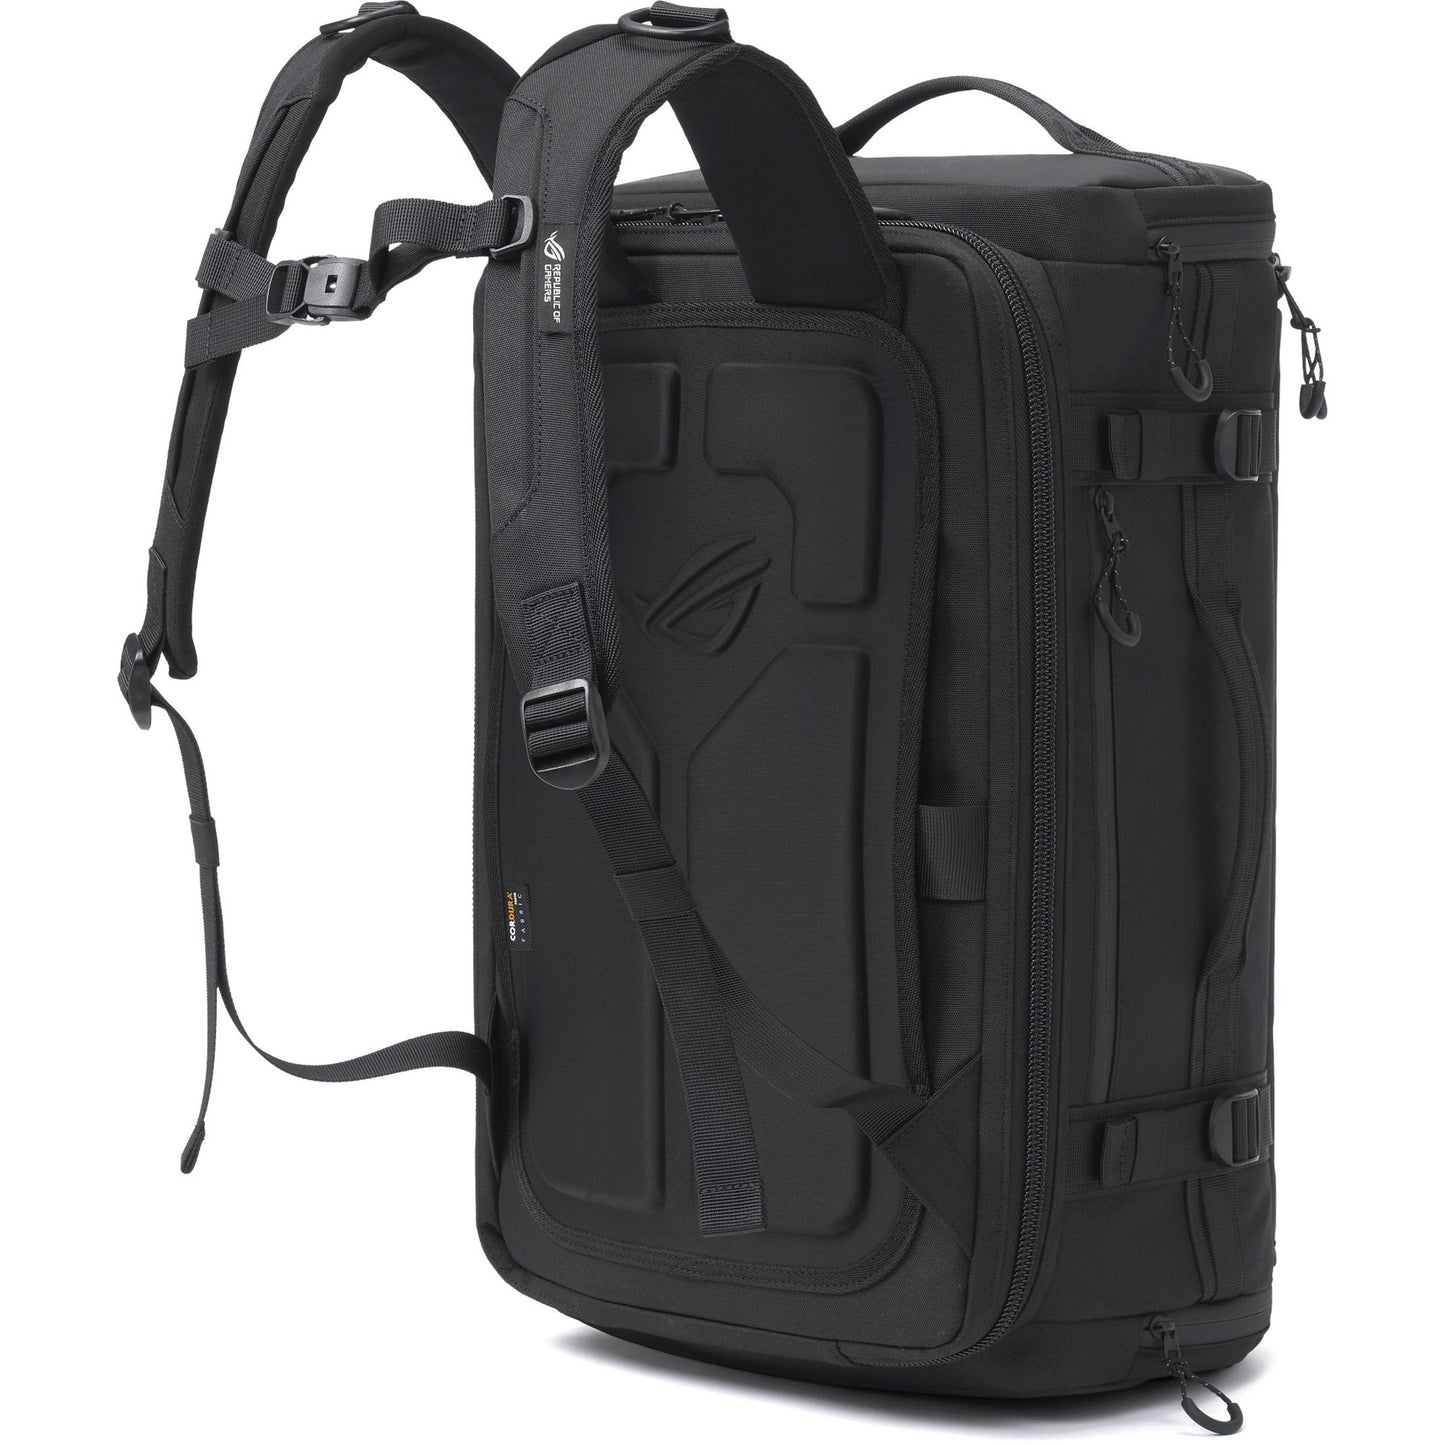 Asus ROG Archer Weekender Carrying Case (Backpack) for 11" to 17" Notebook - Black